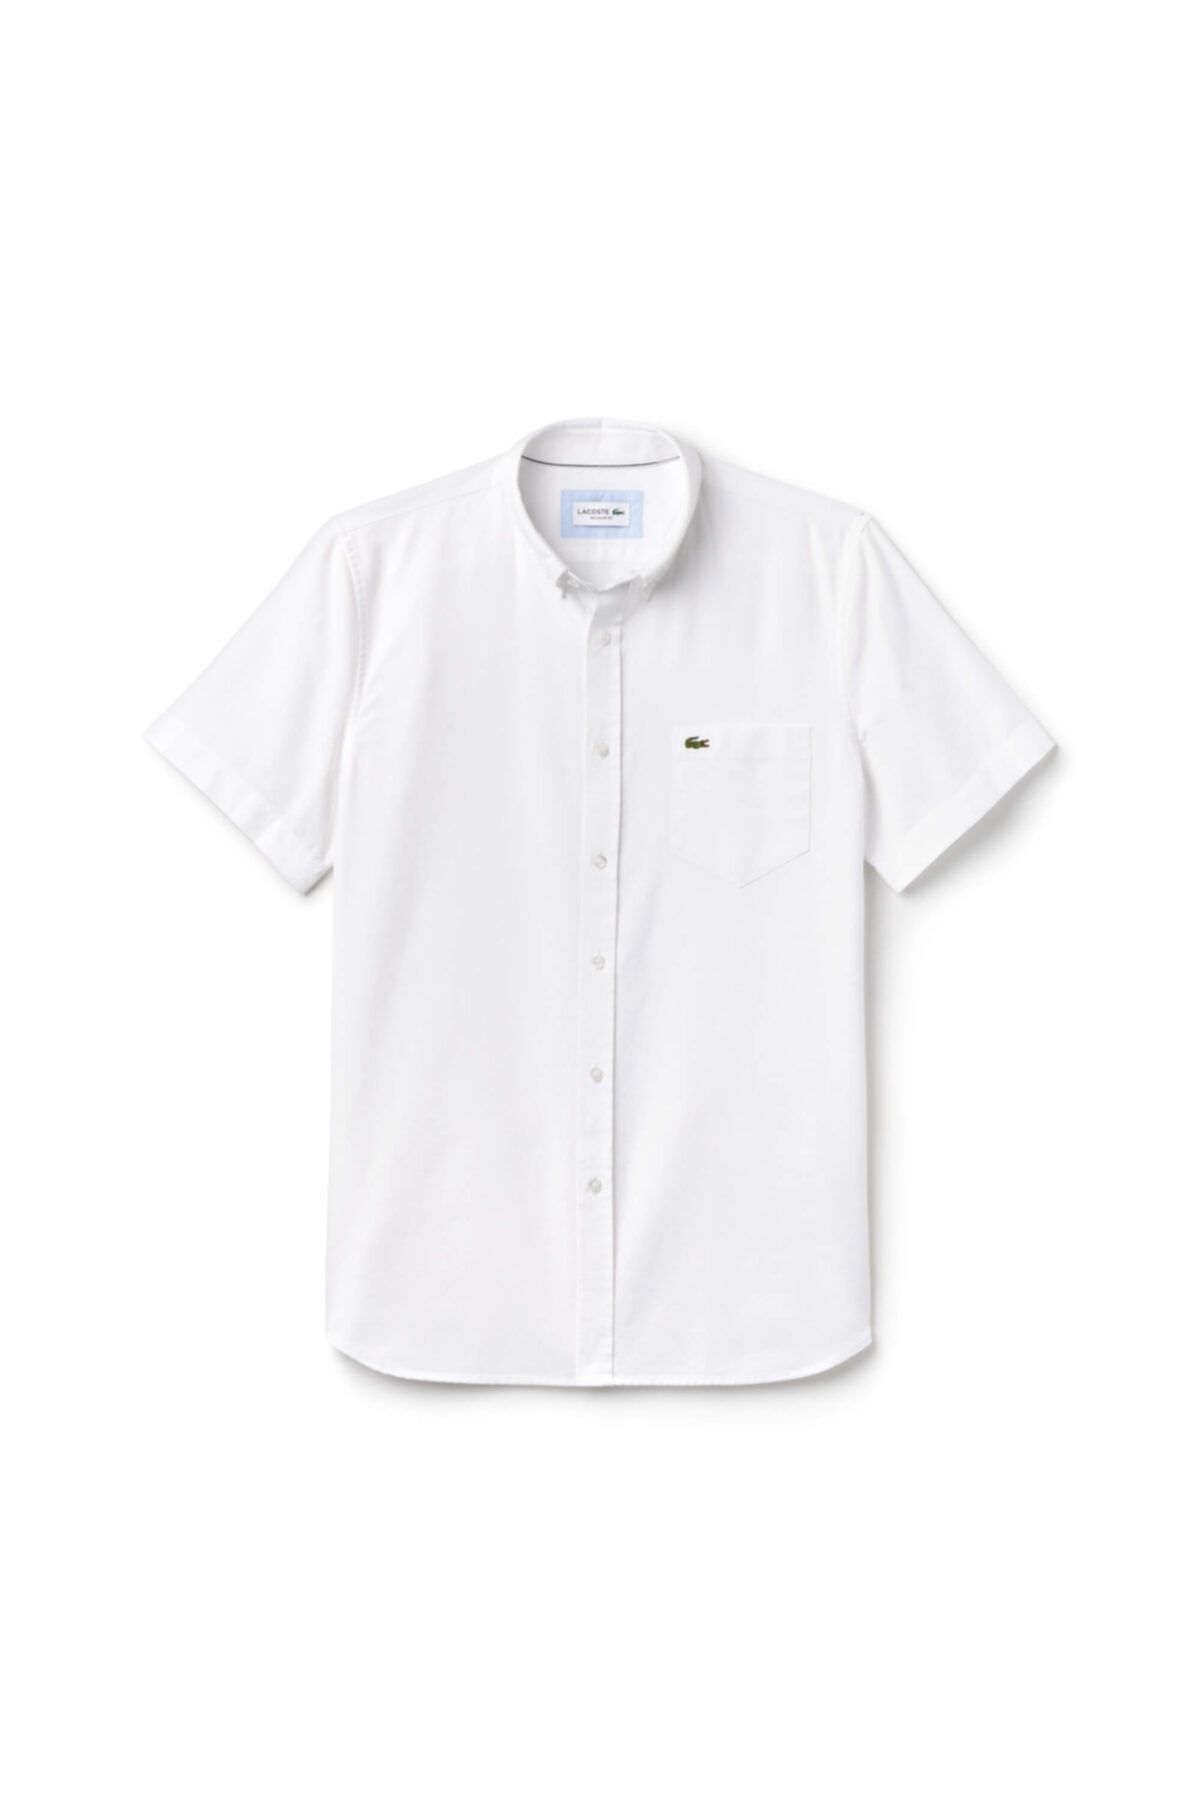 Lacoste Erkek Regular Fit Kısa Kollu Beyaz Gömlek CH4975